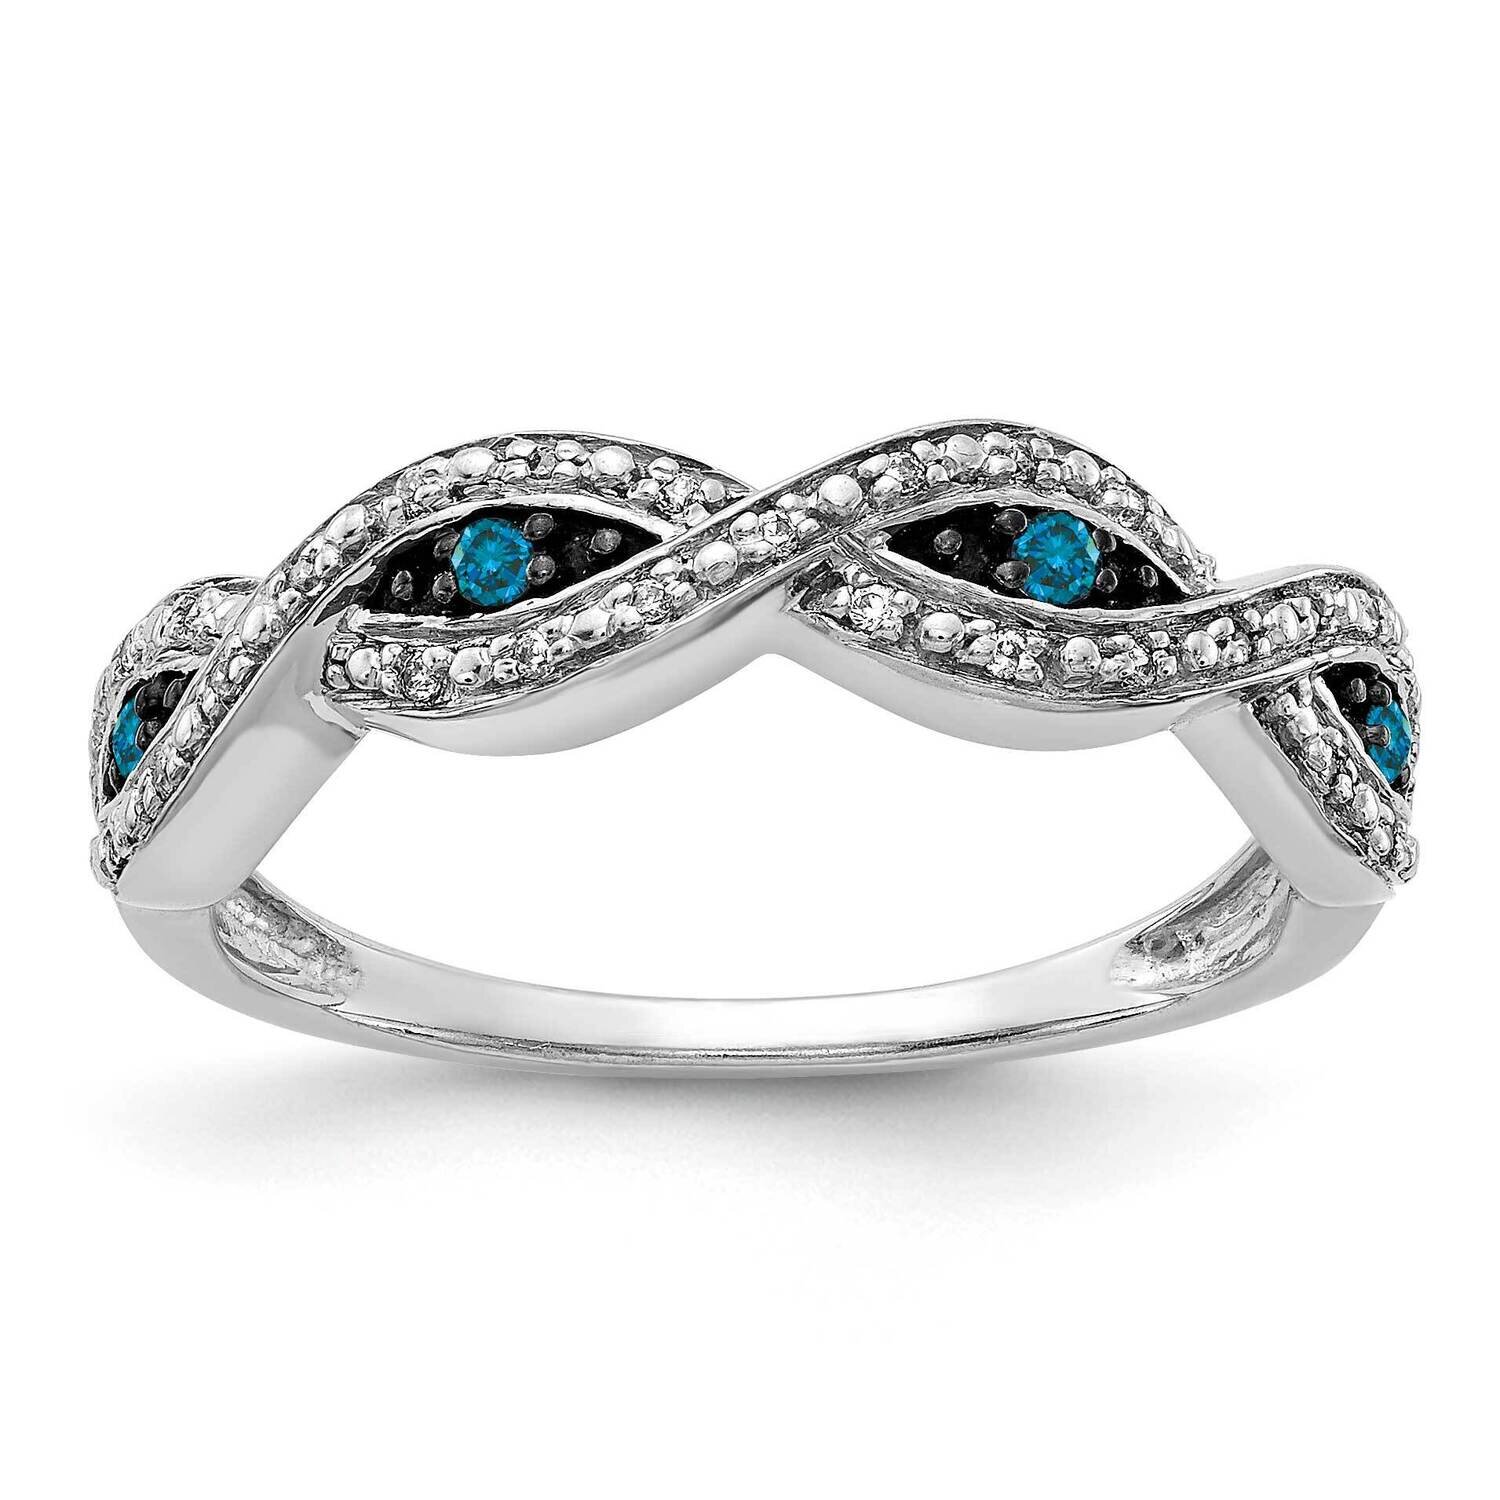 White & Blue Diamond Ring 14k White Gold RM5690-BD-016-WA